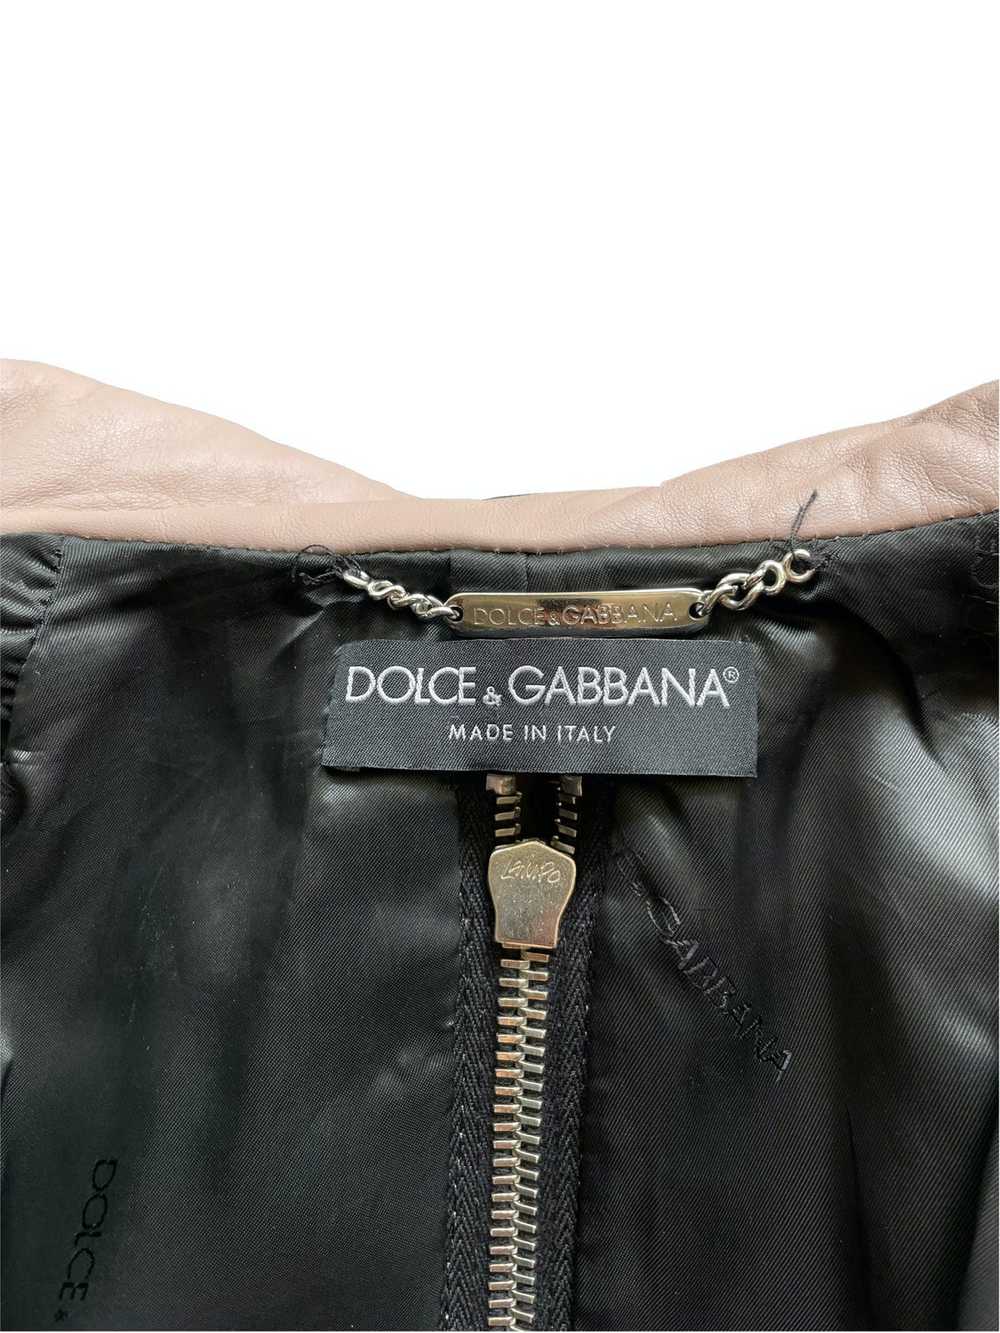 Dolce & Gabbana Dolce Gabbana SS2003 leather jack… - image 7